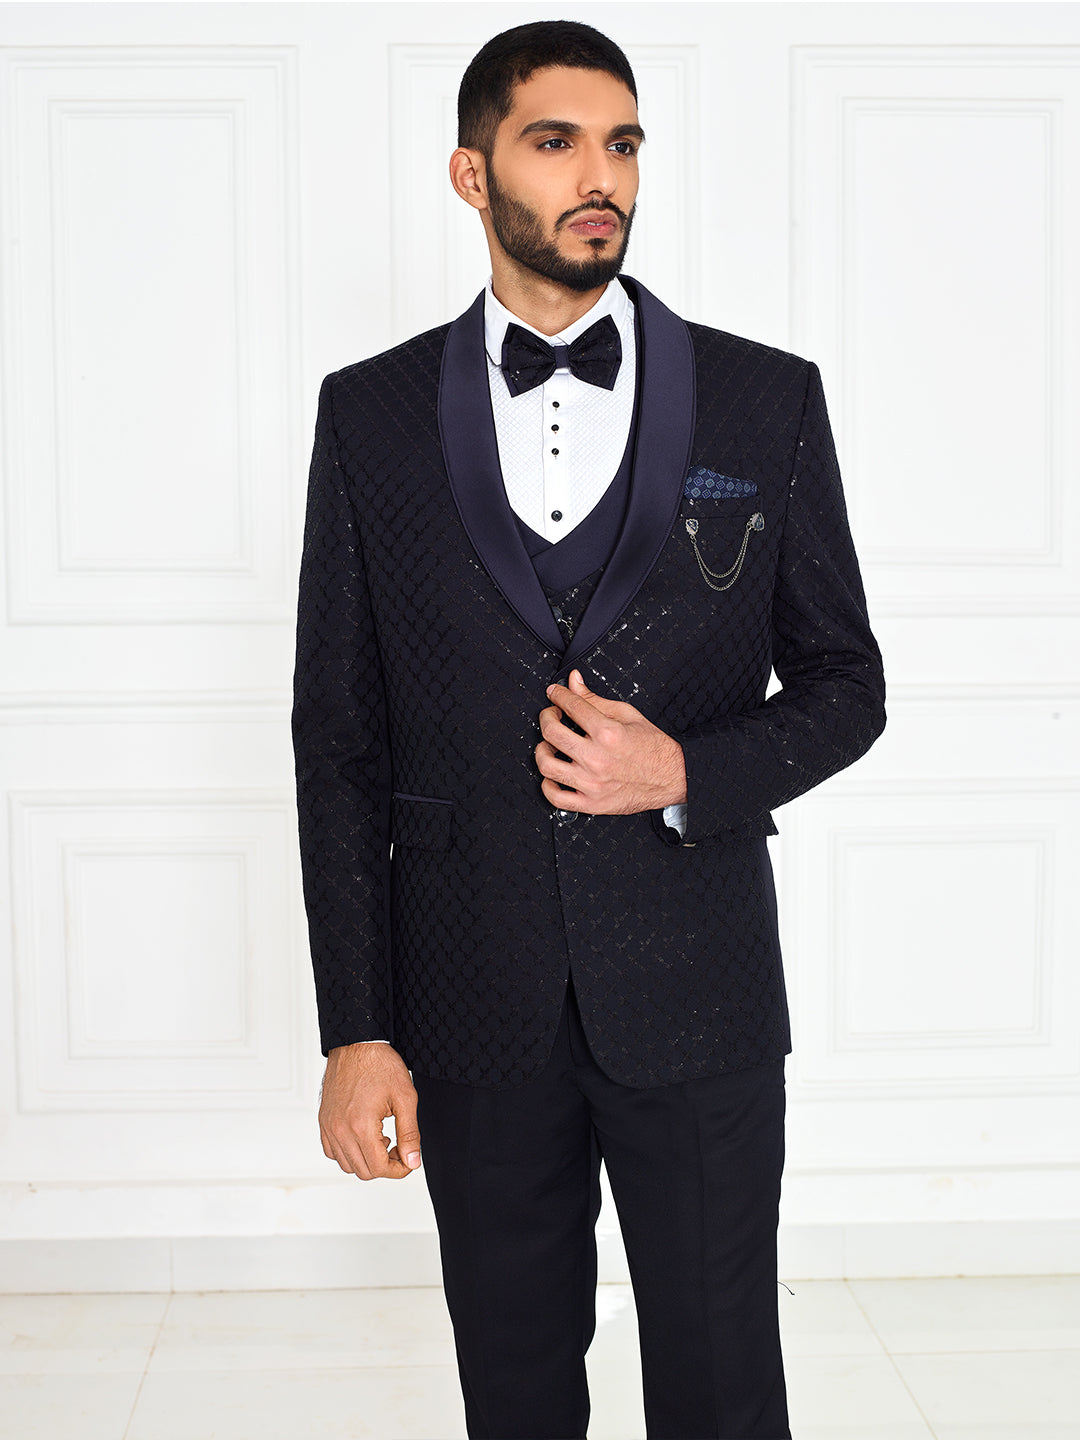 Trending Men's Suit Ideas for 2024 Weddings